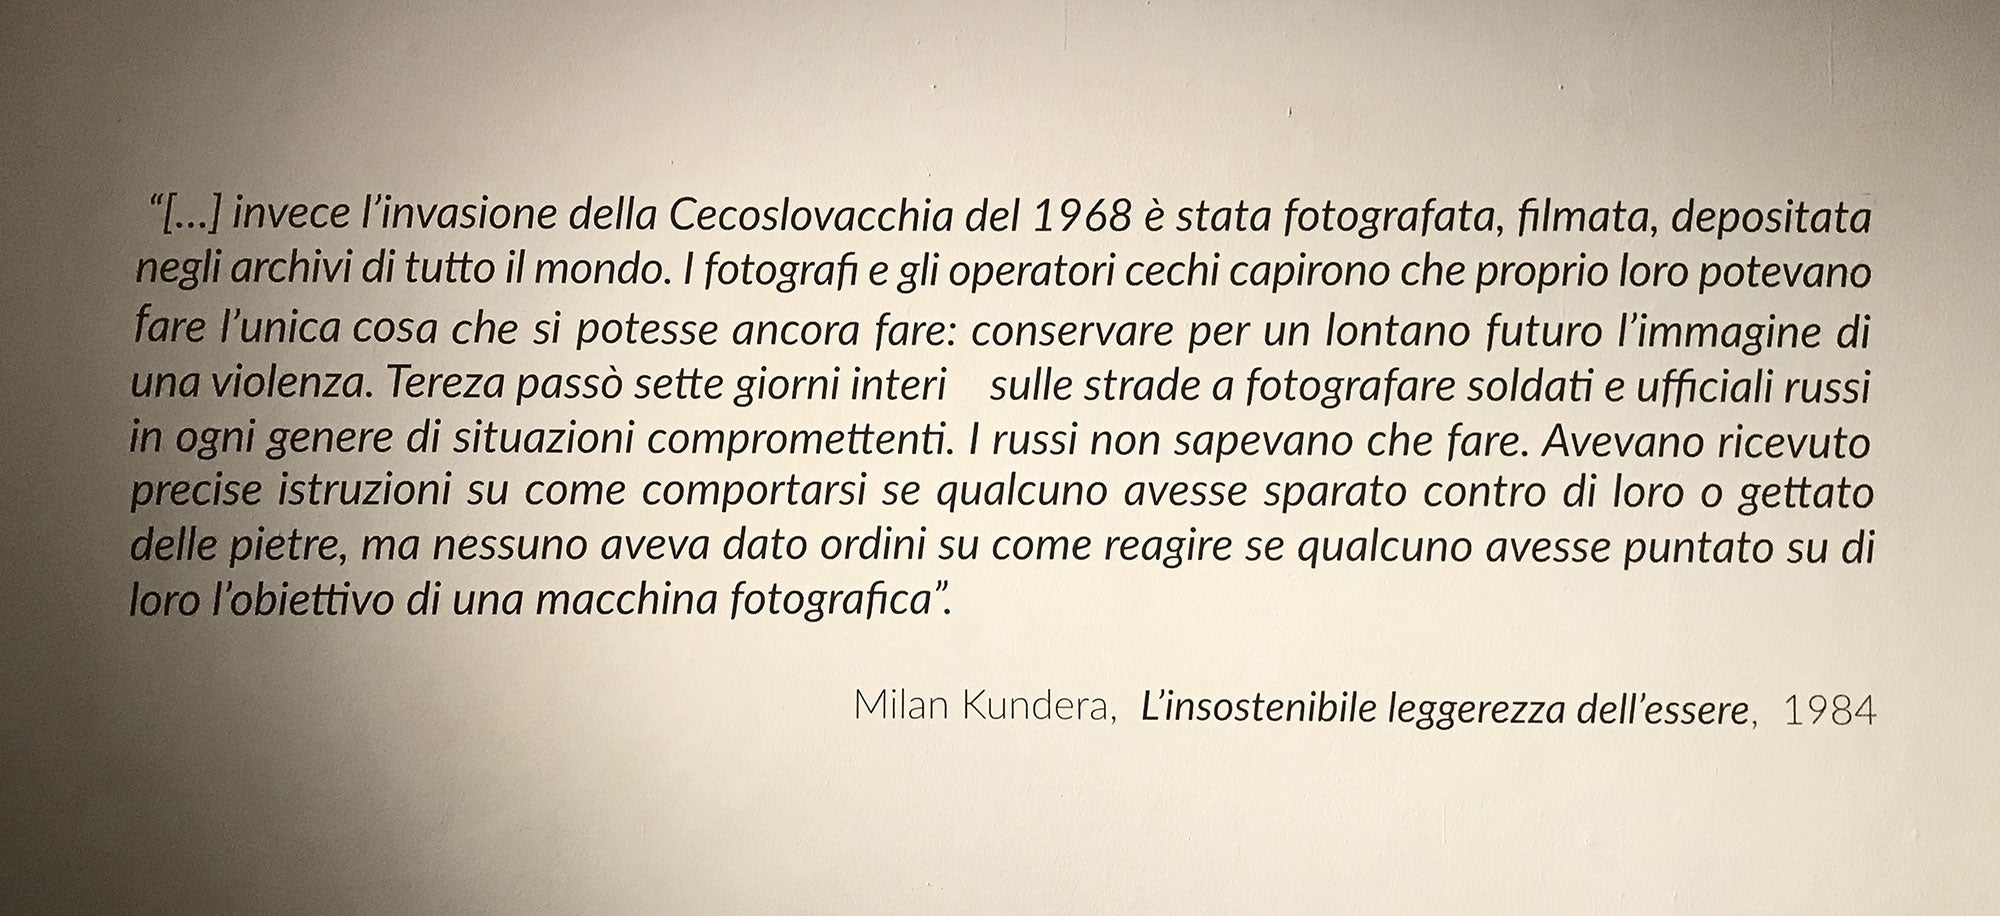 Photographic exhibition in Palazzo Reale di Milano, milan kundera quotes, kundera quotes